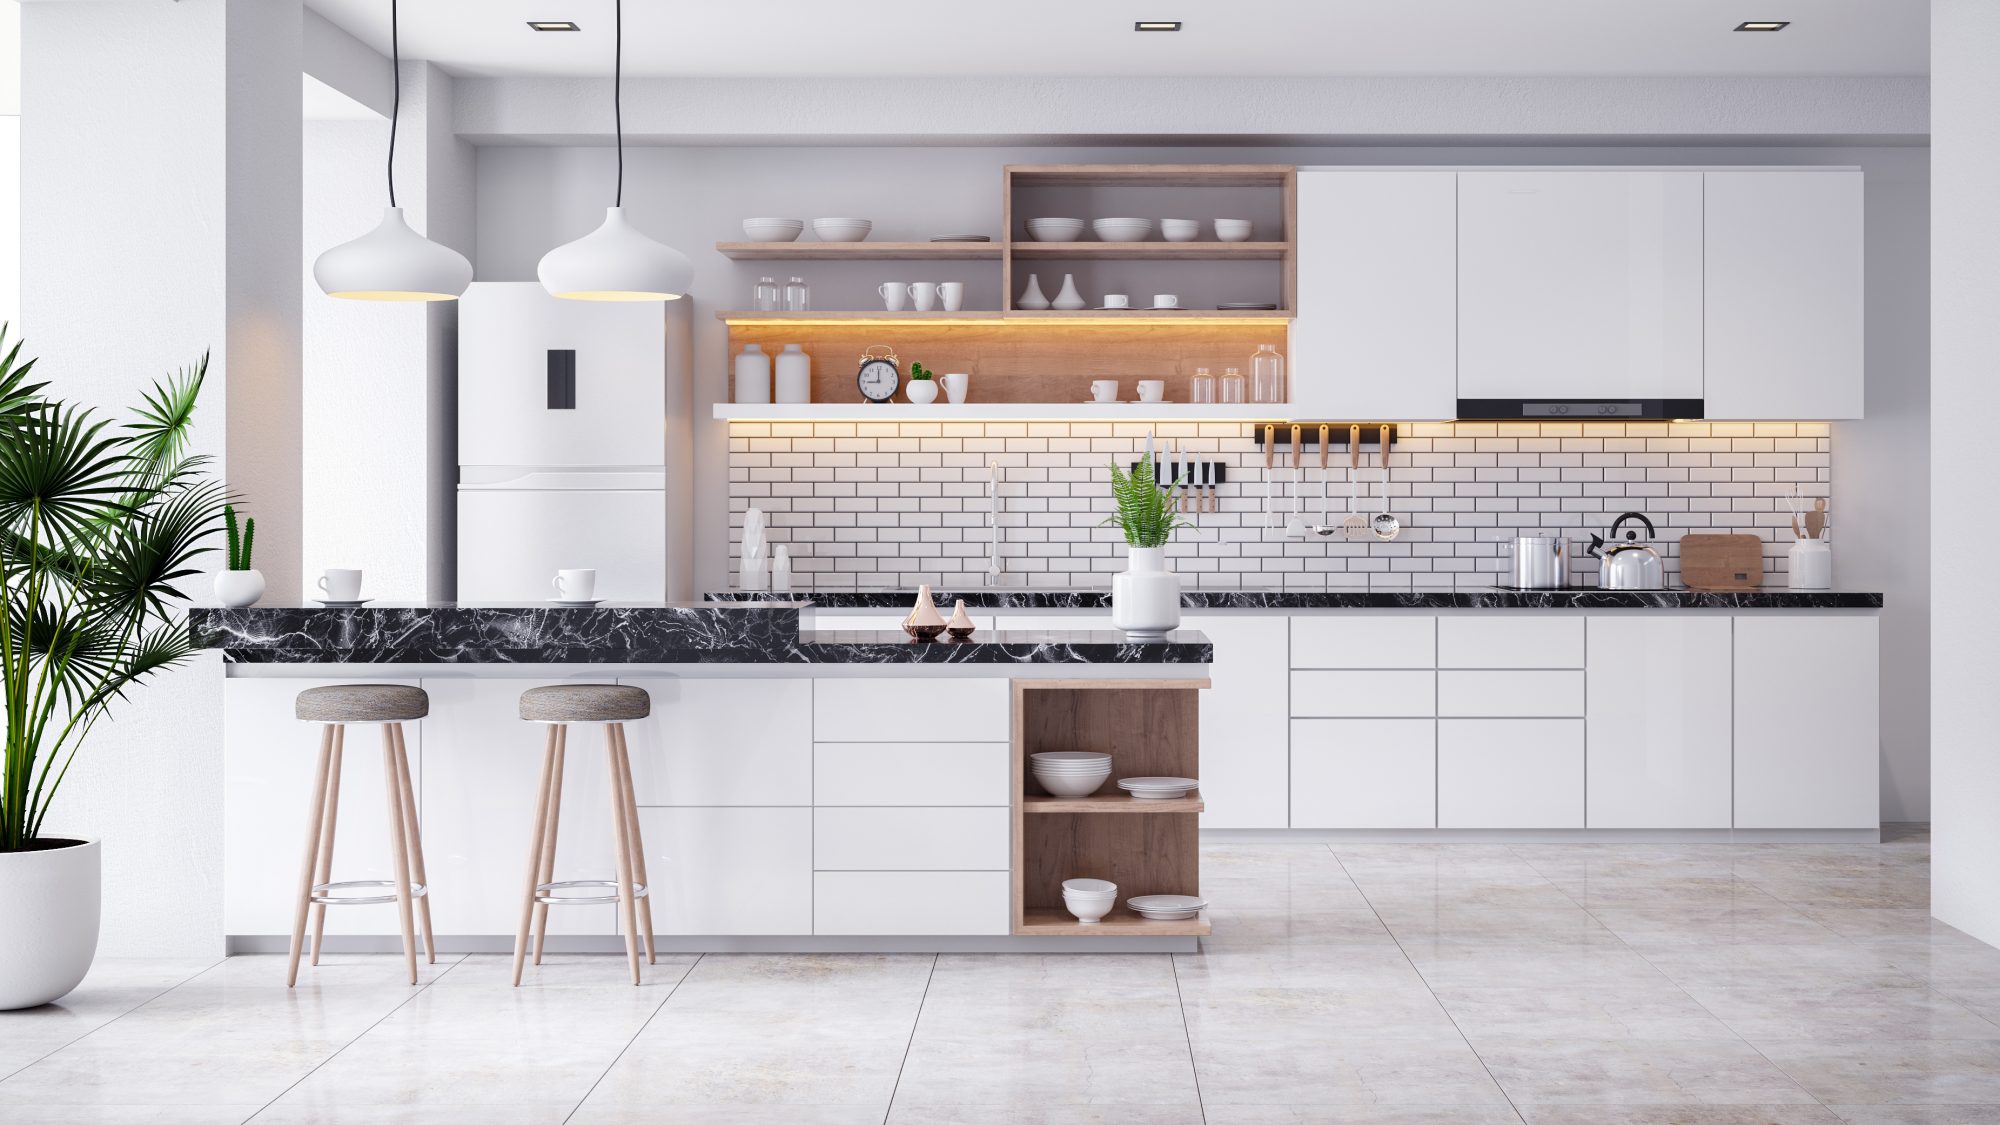 DIY Home Improvements: Kitchen Renovation Checklist